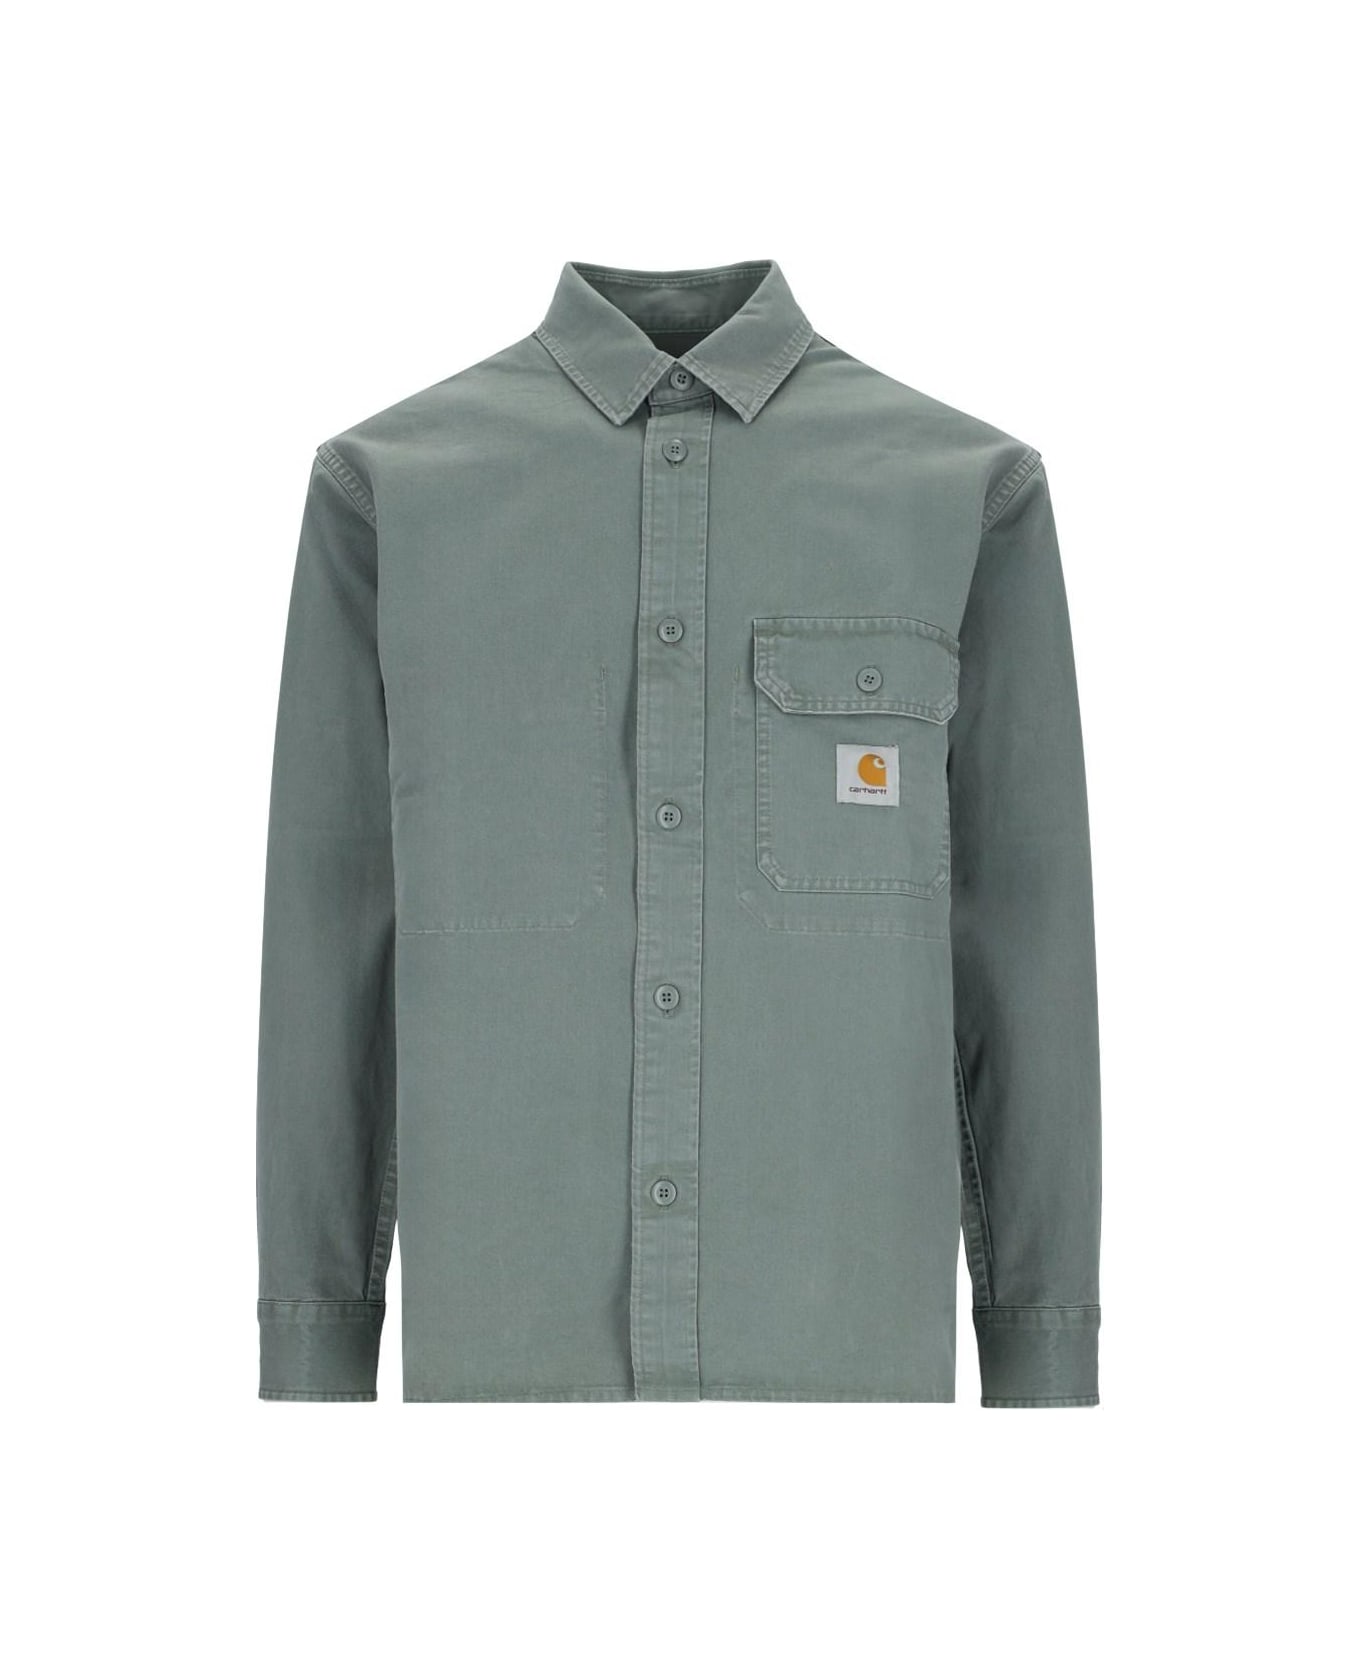 Carhartt 'reno' Shirt Jacket - Verde シャツ